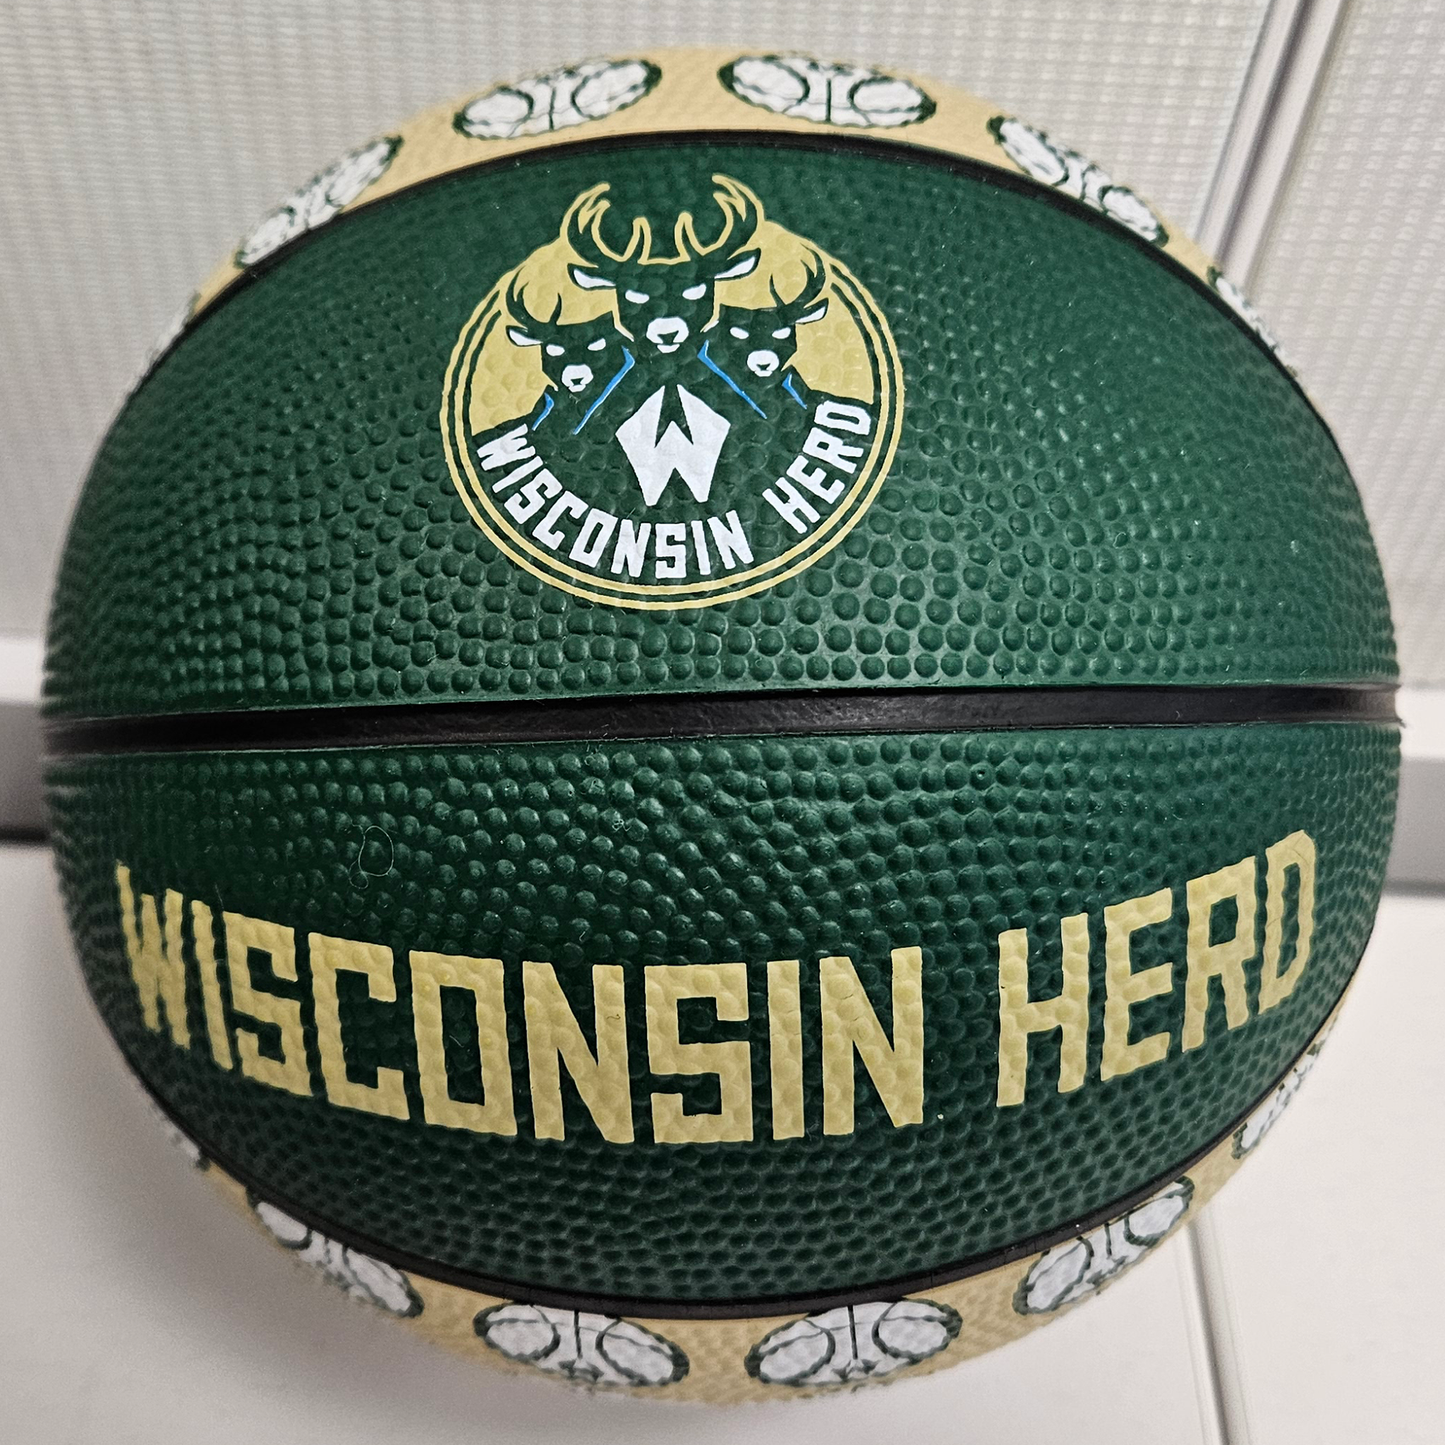 Wisconsin Herd Mini Rubber Basketball